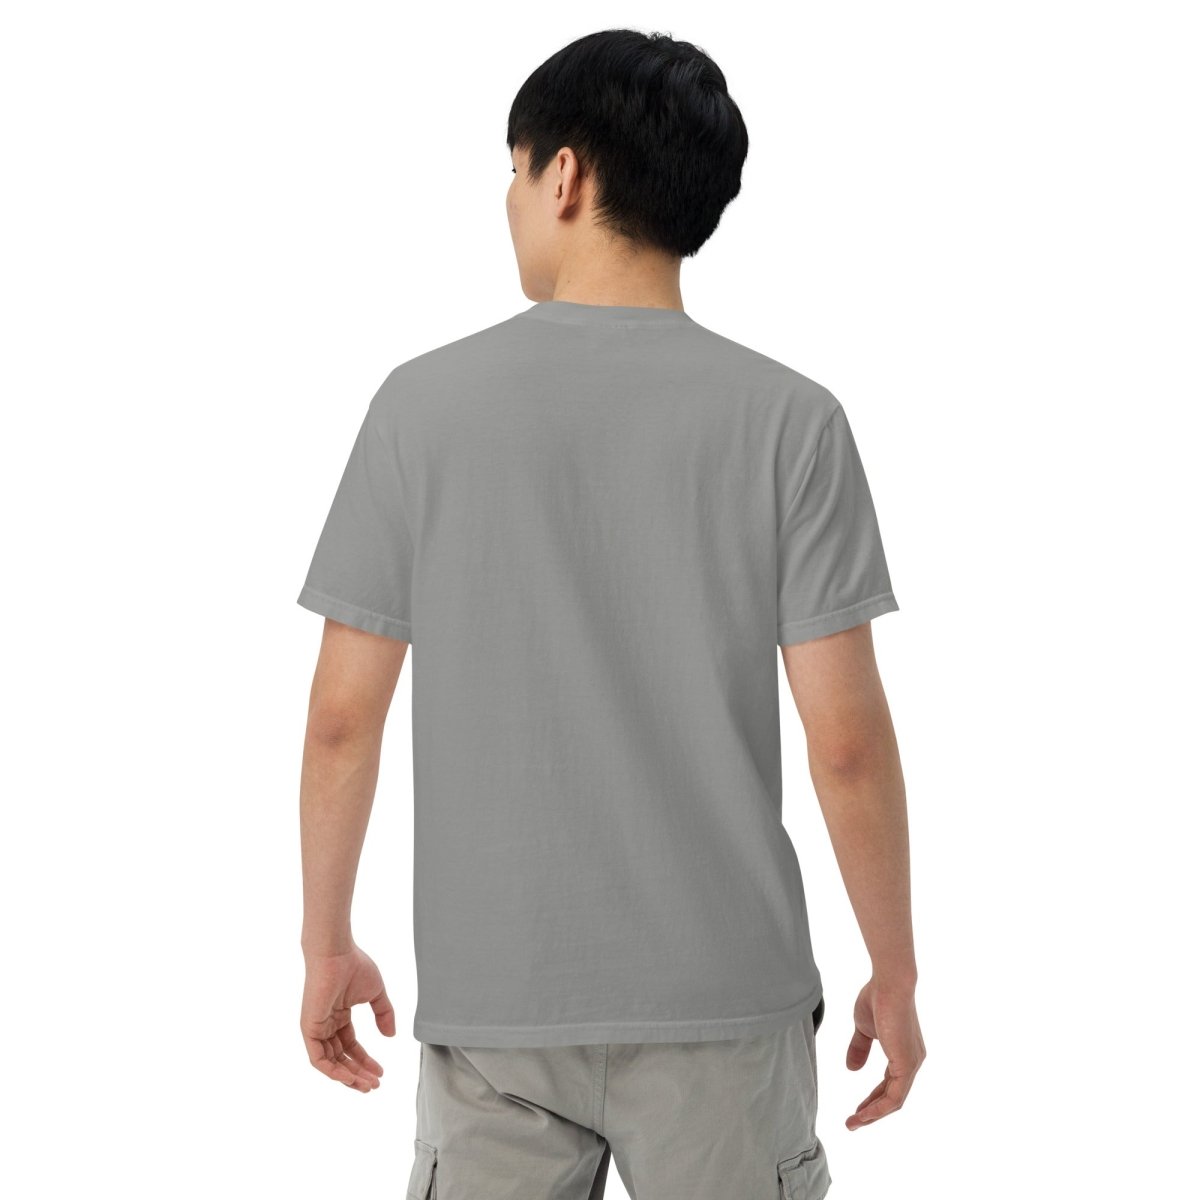 Unisex garment-dyed heavyweight t-shirt - Wifler Industries--Wifler Industries-3408529_15176--Grey-S--Unisex garment-dyed